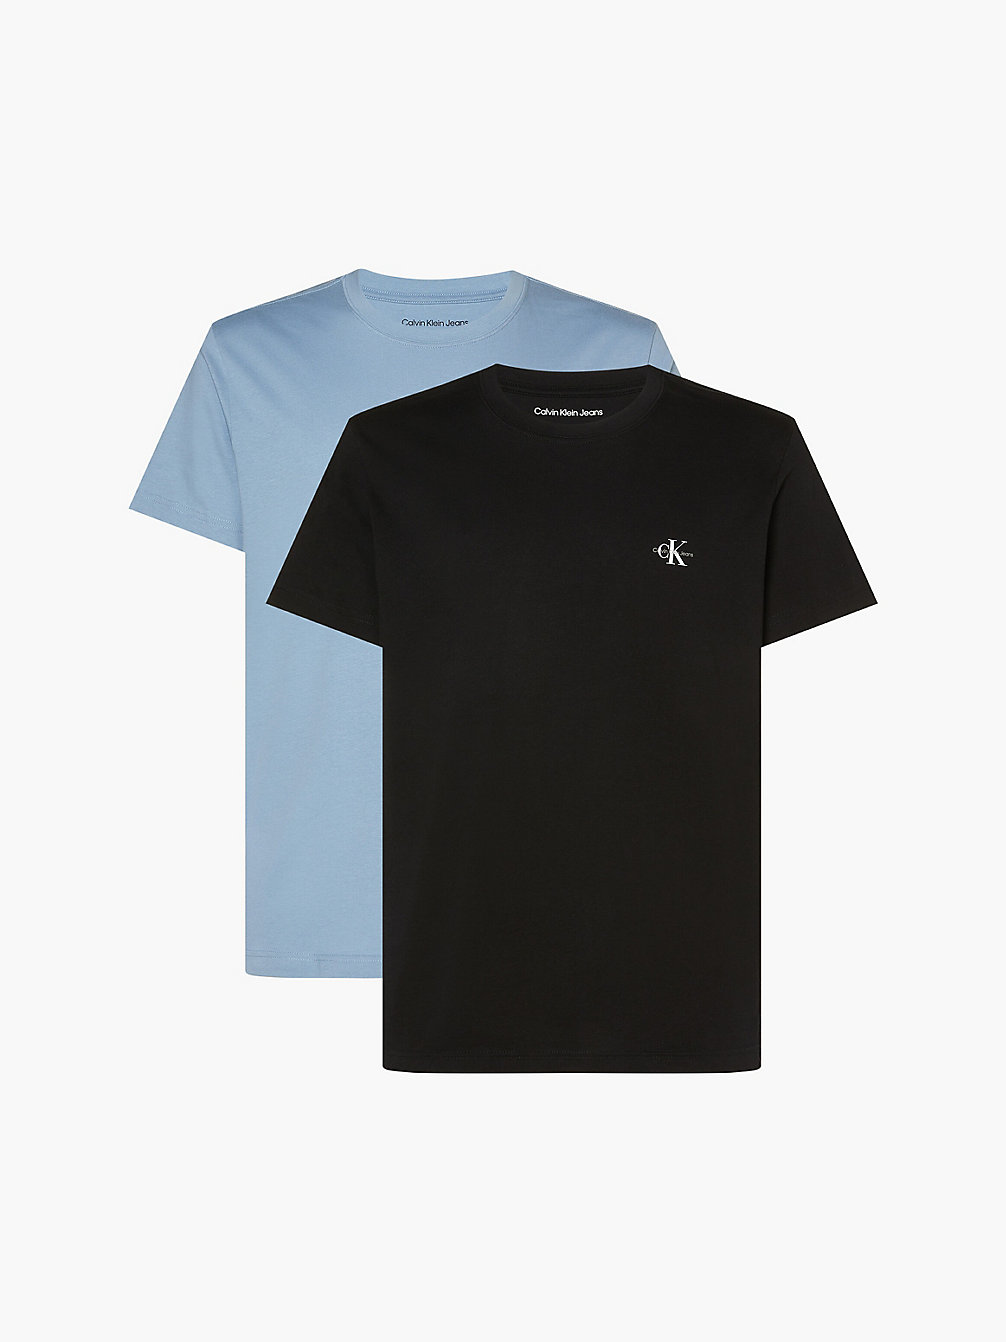 ICELAND BLUE / CK BLACK > Комплект футболок с монограммой 2 шт. > undefined женщины - Calvin Klein